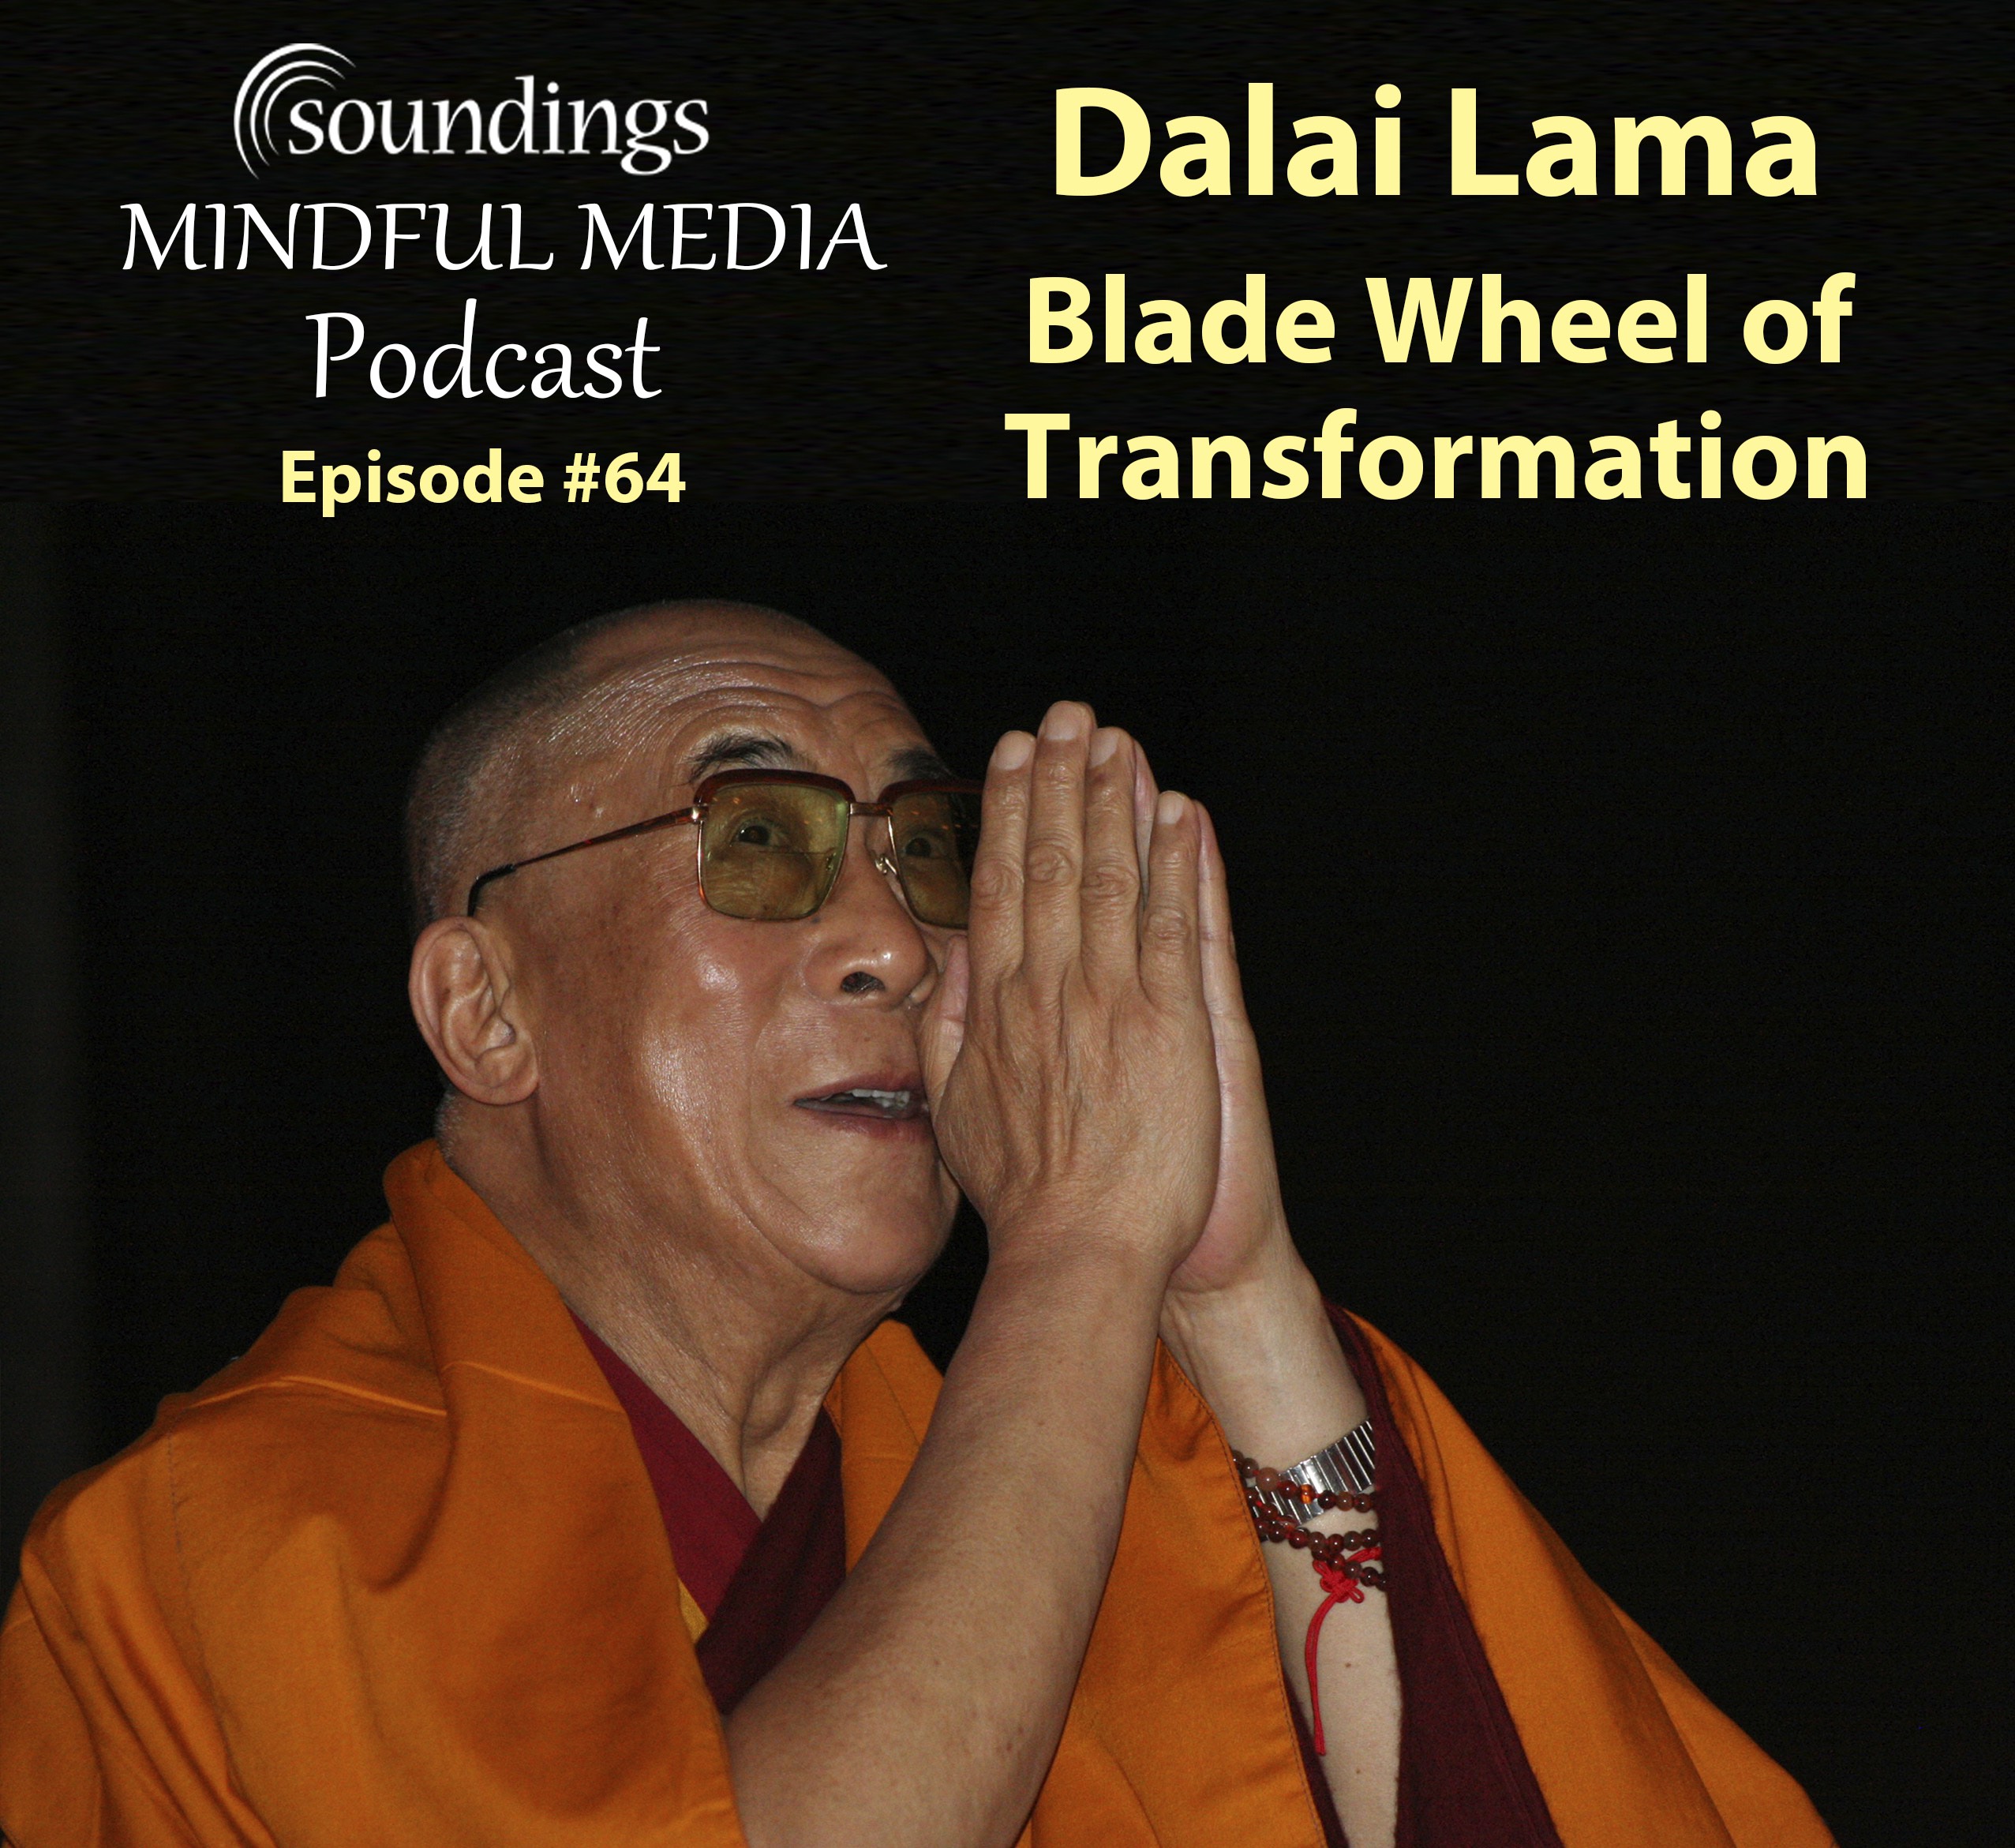 Making sense of Dalai Lama’s Teaching on Overcoming Addictions & Aversions Using the Blade Wheel of Transformation